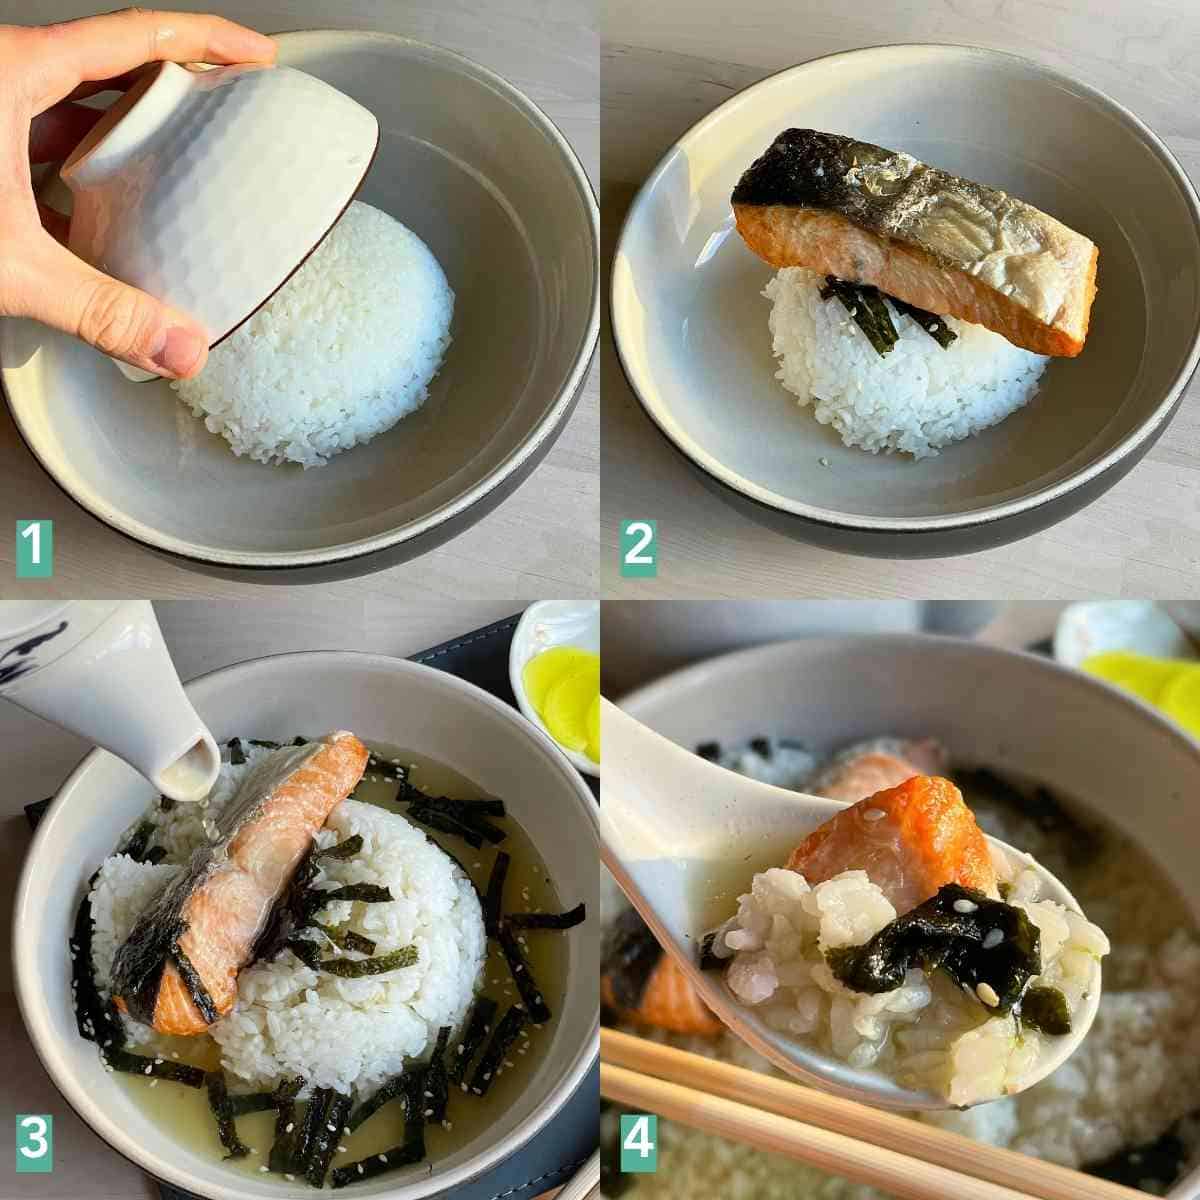 How to make ochazuke at home